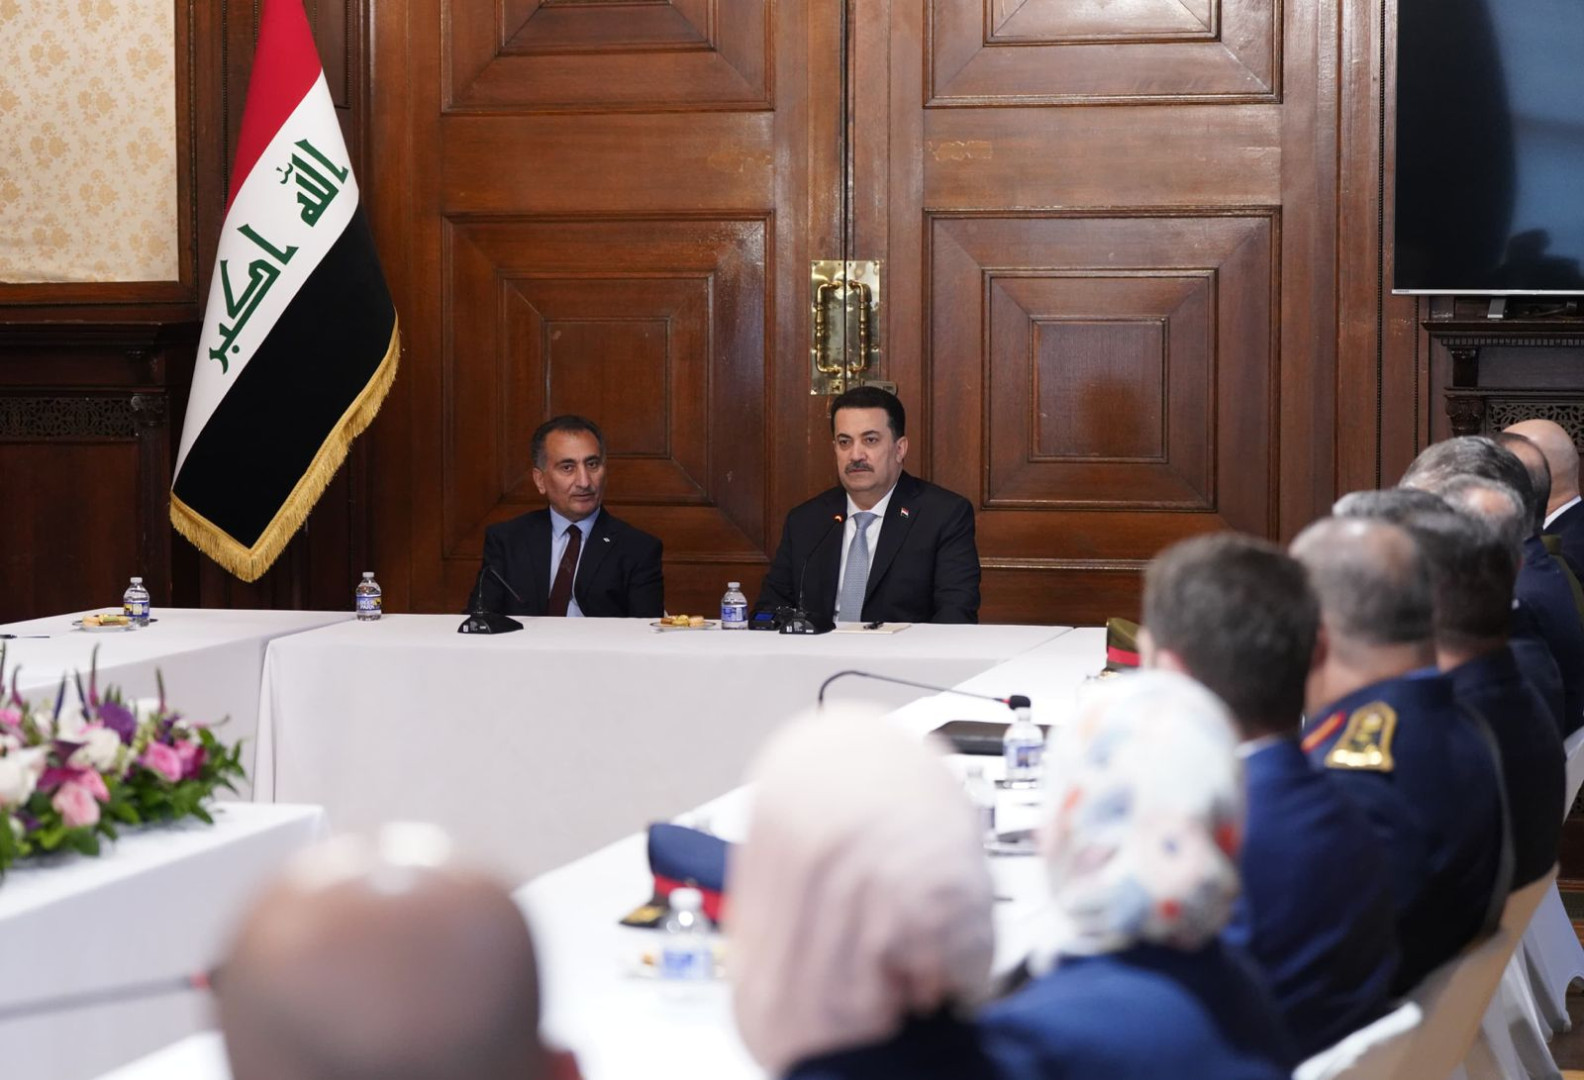 Al-Sudani issues a directive to the Iraqi embassy in Washington